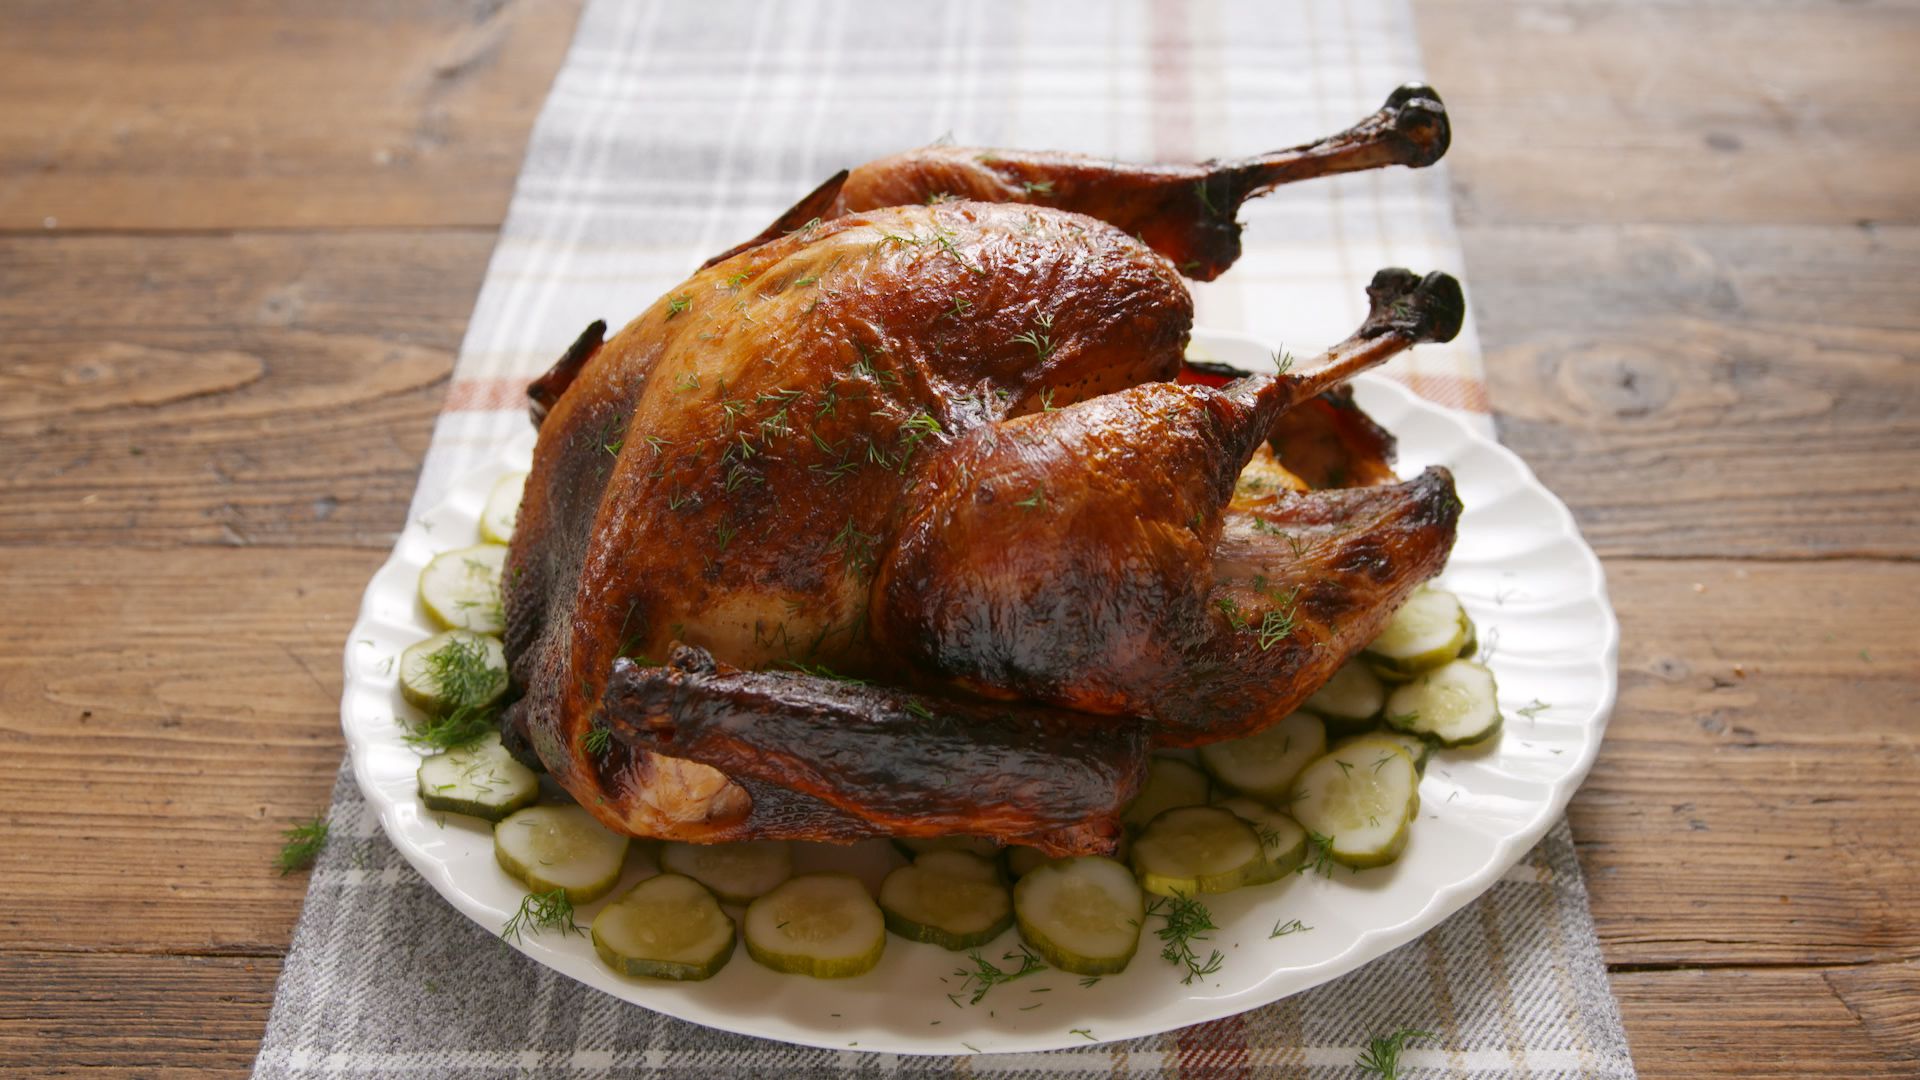 Best Pickle-Brined Turkey Recipe - How to Make Pickle-Brined Turkey